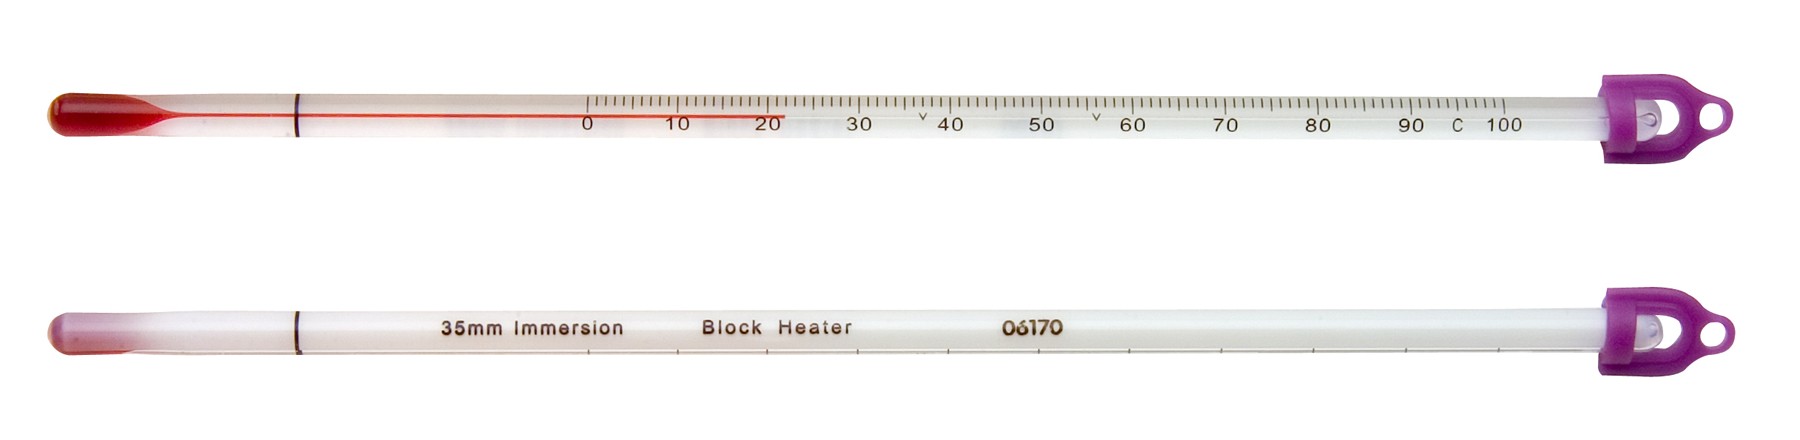 SP Bel-Art, H-B DURAC Dry Block/Incubator Liquid-In-Glass Thermometer; 0 to 70C, 150mm Immersion, Organic Liquid Fill